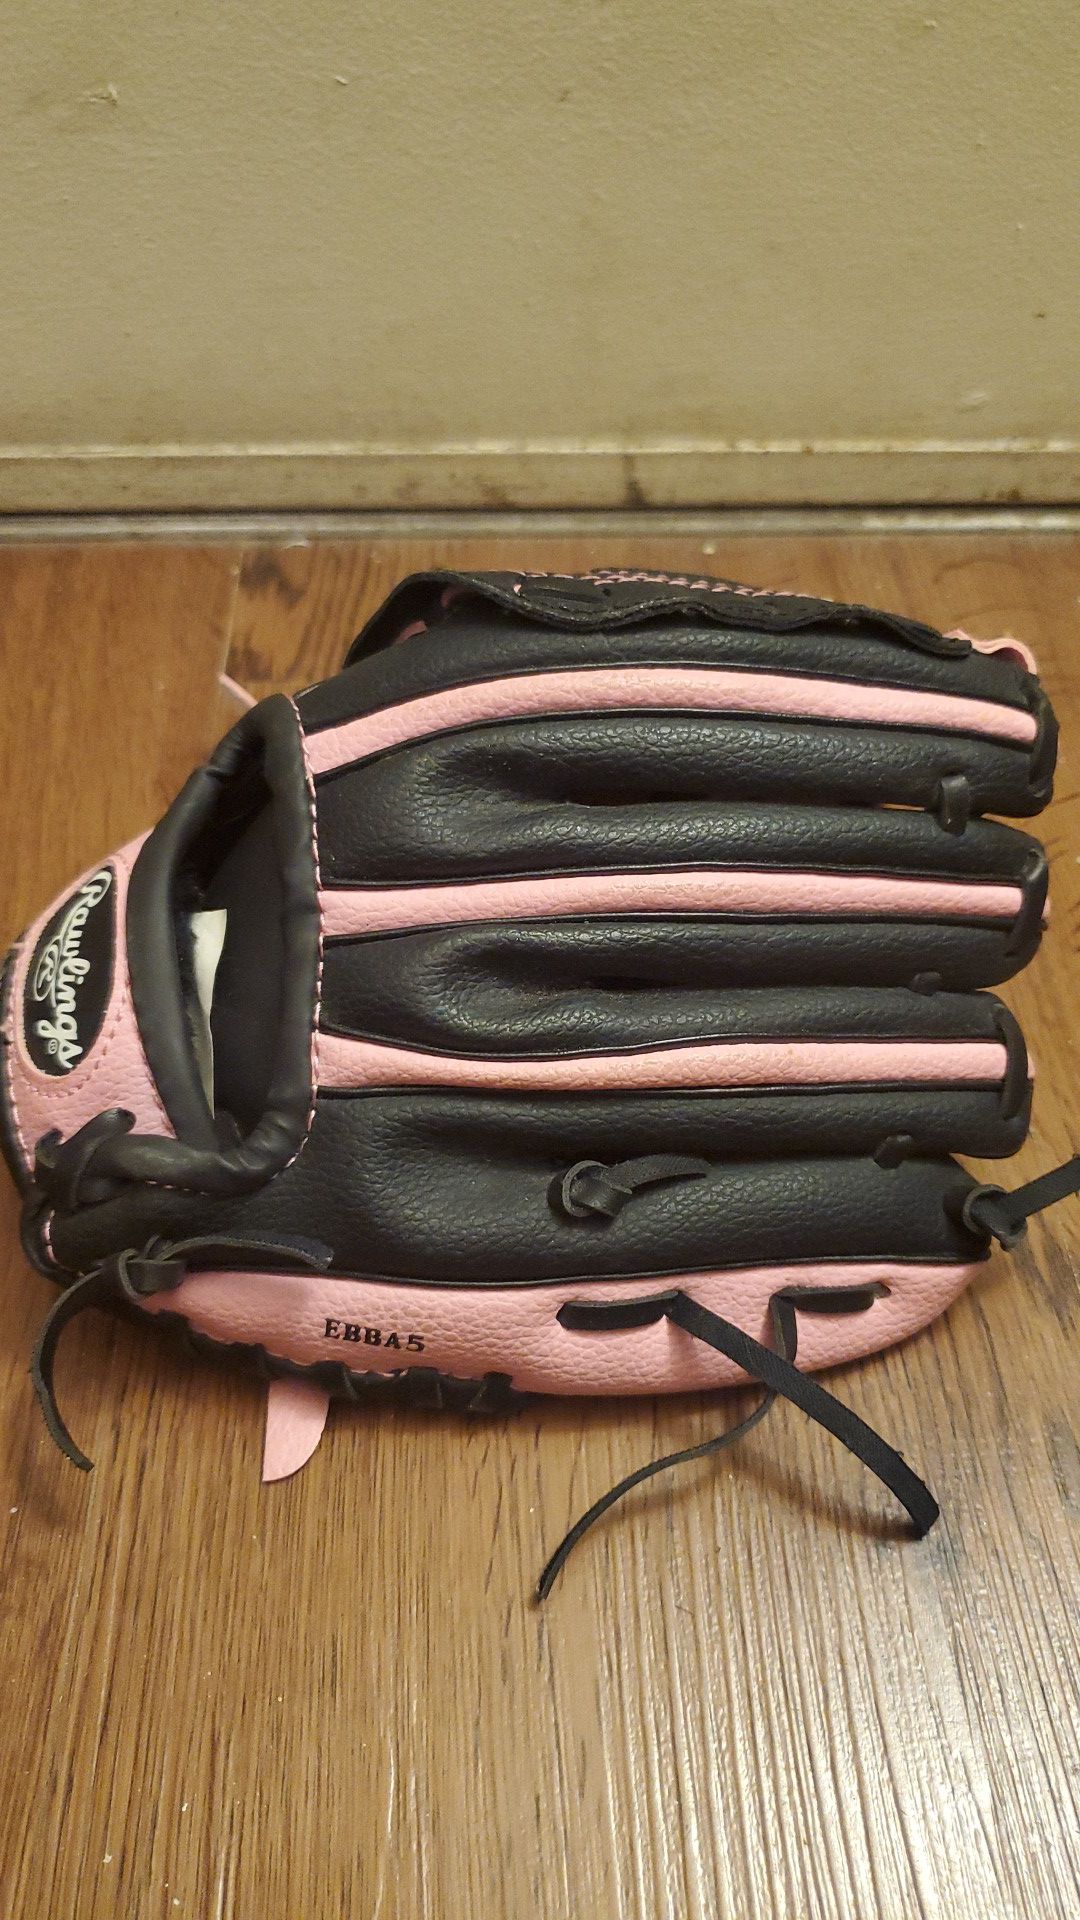 Rawlings t-ball glove